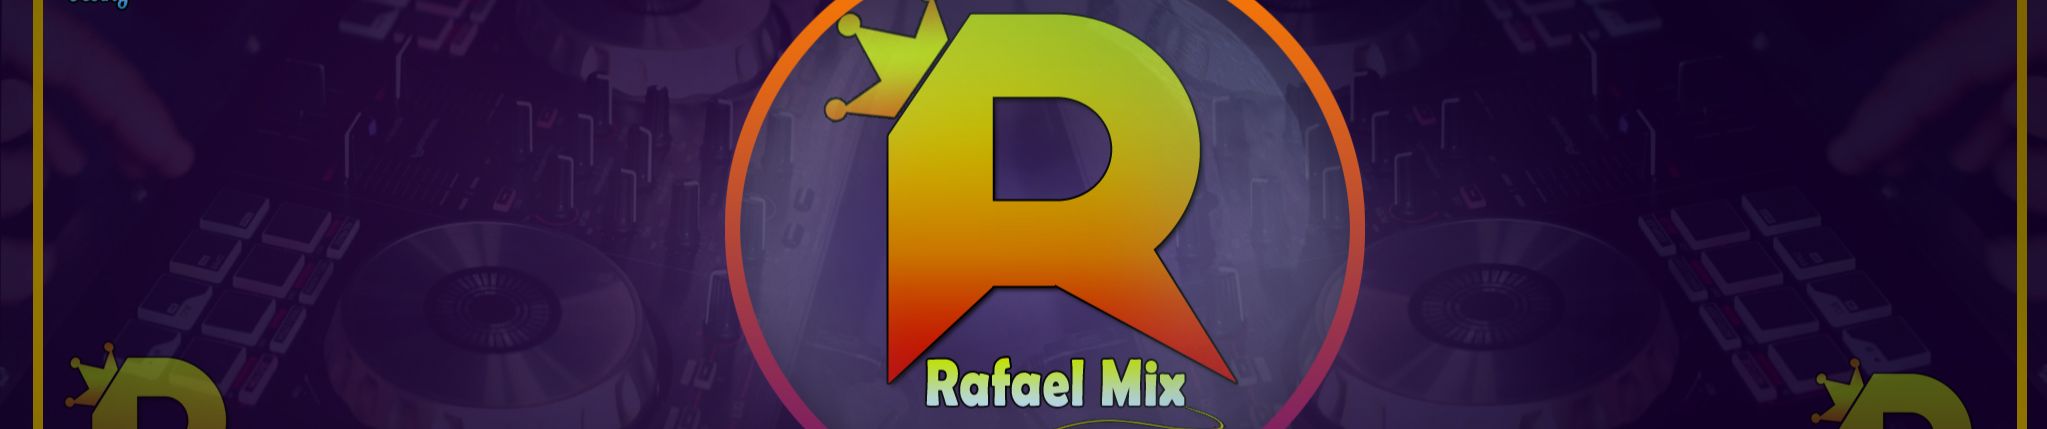 Stream Dj-Rafael Studio Ralem music